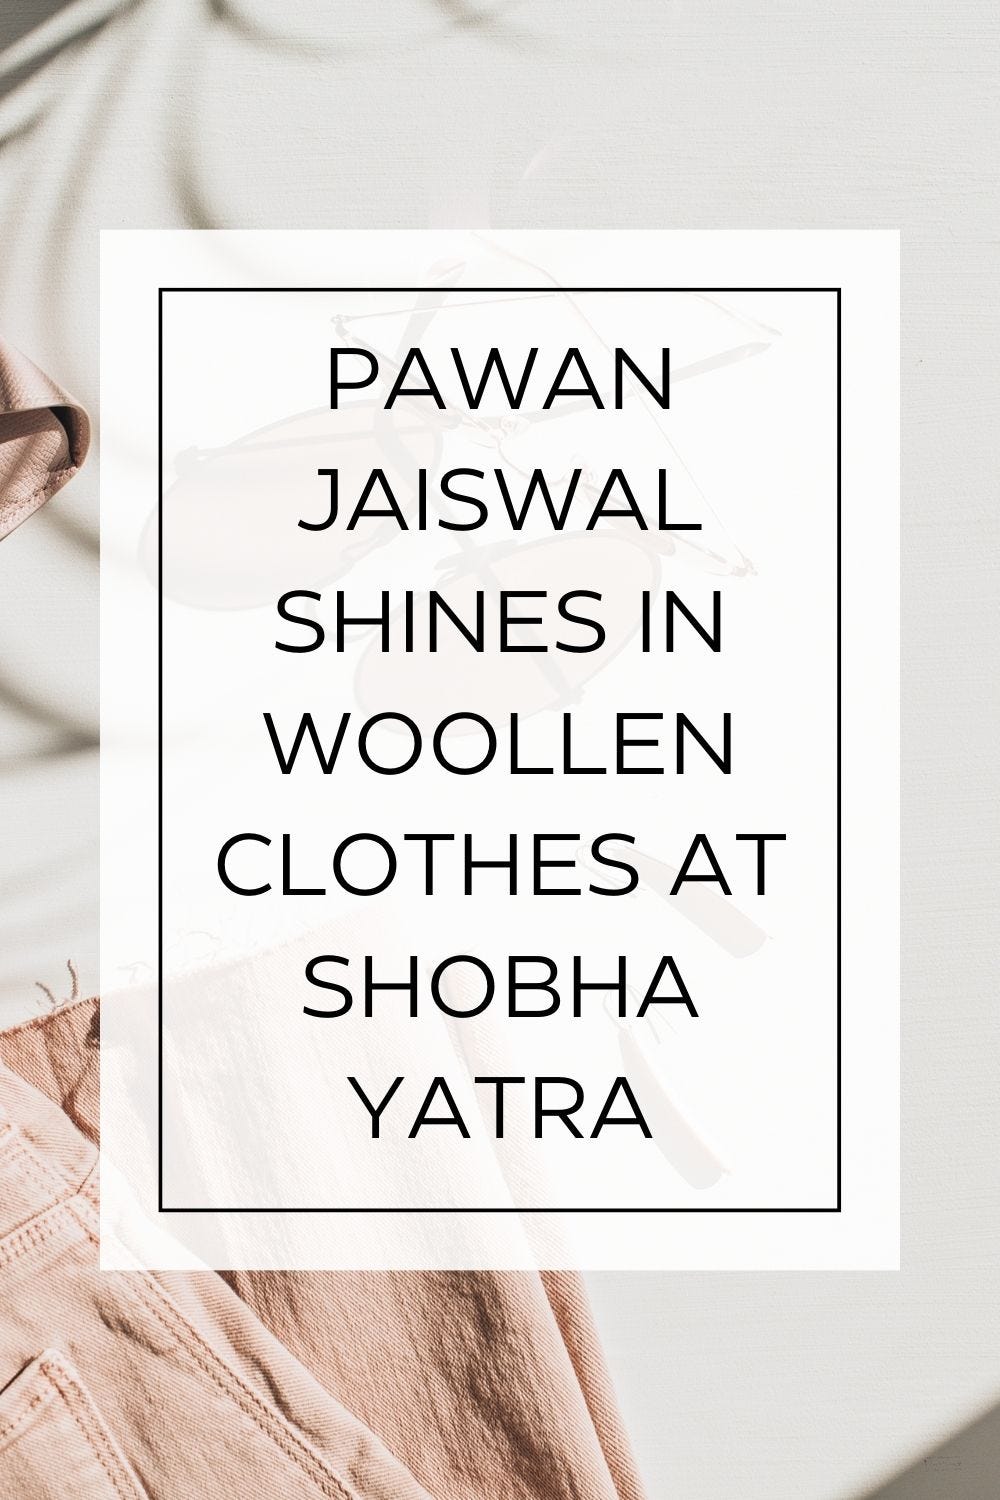 Festive Flair: Pawan Jaiswal Shines in Woollen Clothes at Shobha Yatra | by Pawan Jaiswal | Medium